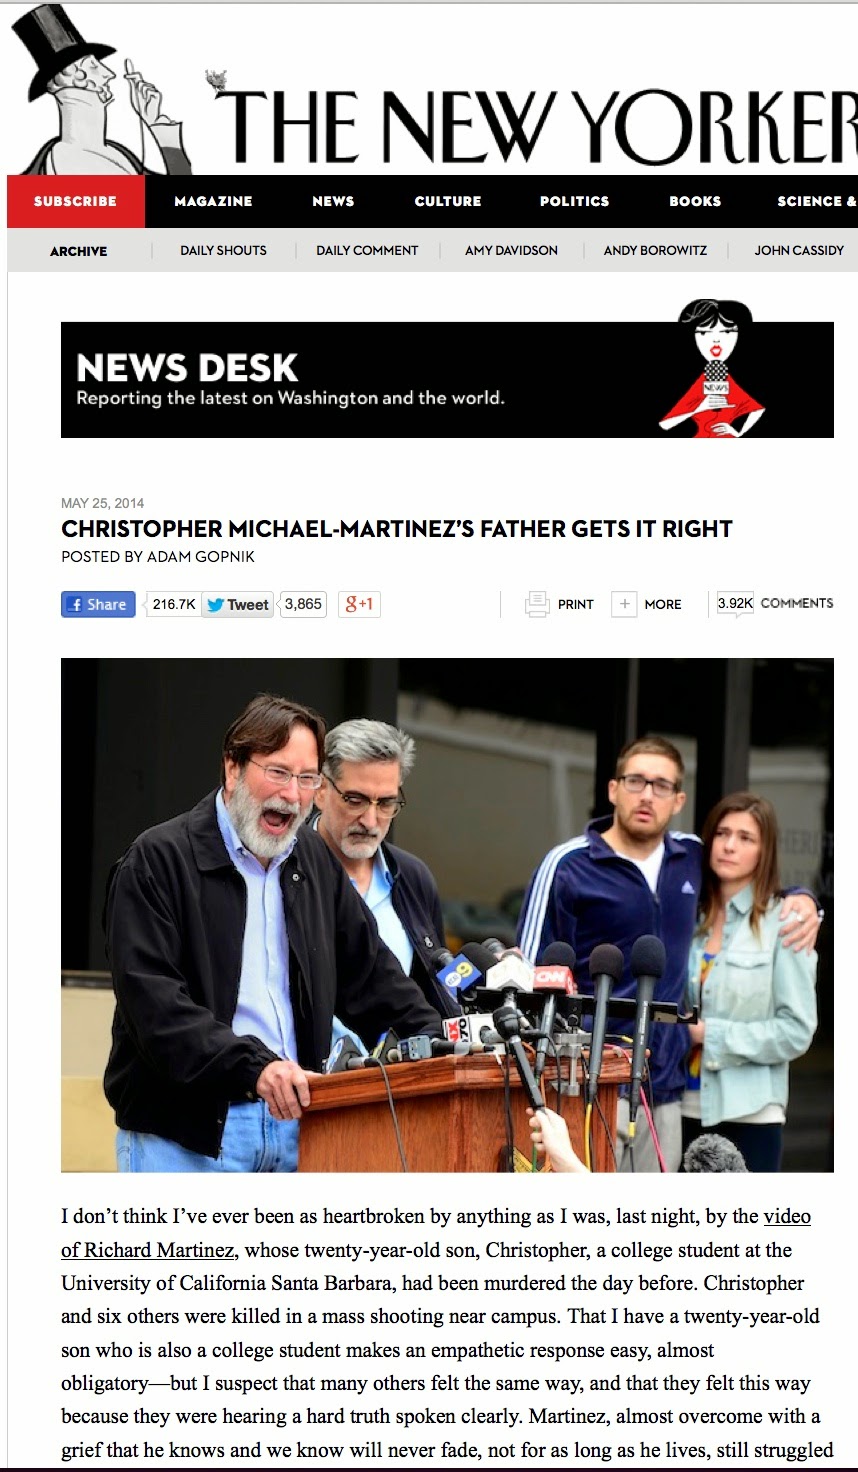 http://www.newyorker.com/online/blogs/newsdesk/2014/05/christopher-michael-martinezs-father-gets-it-right.html?utm_source=nextdraft&utm_medium=email